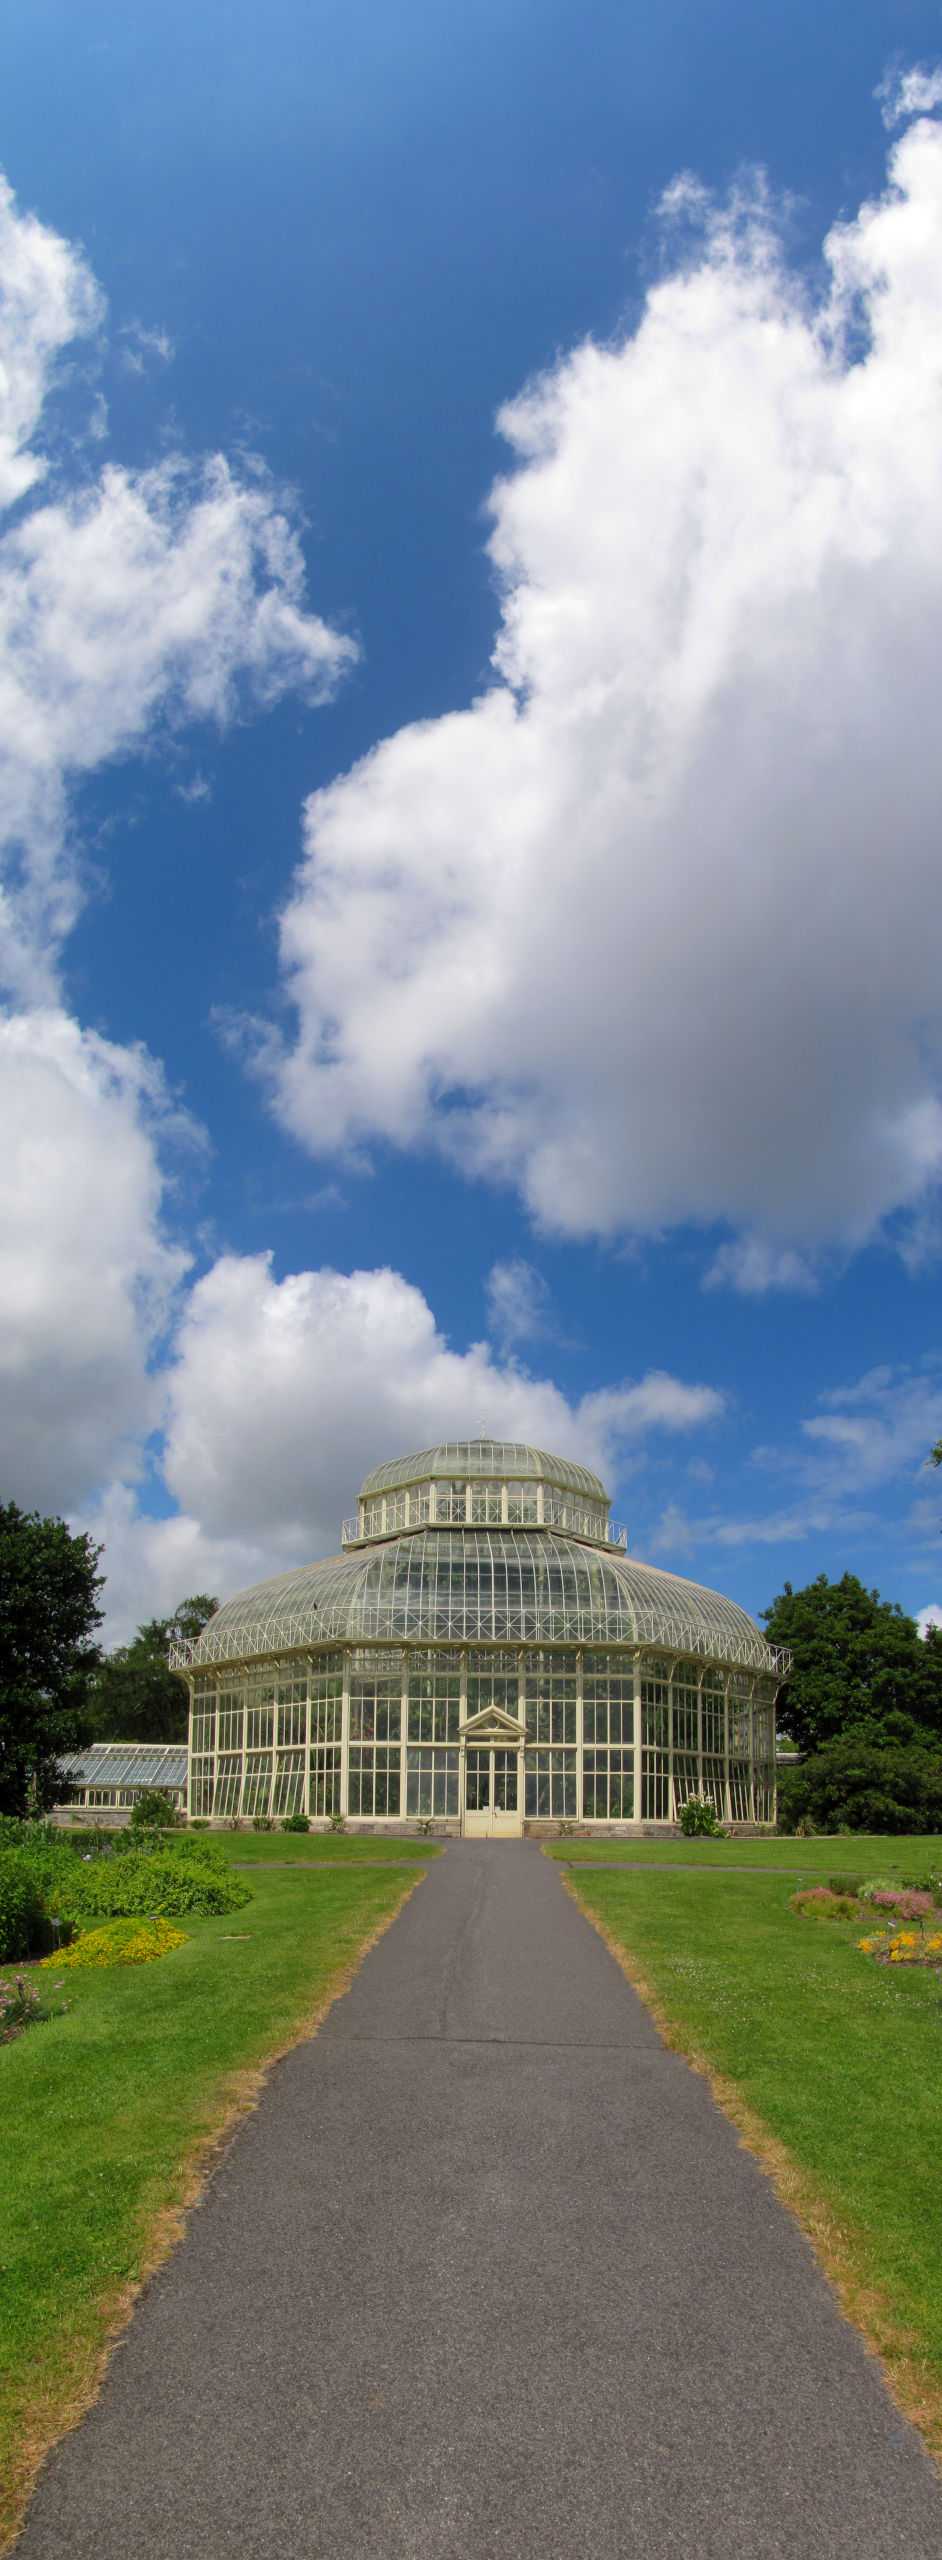 Greenhouse in Dublins National Botanic Gardens of Ireland